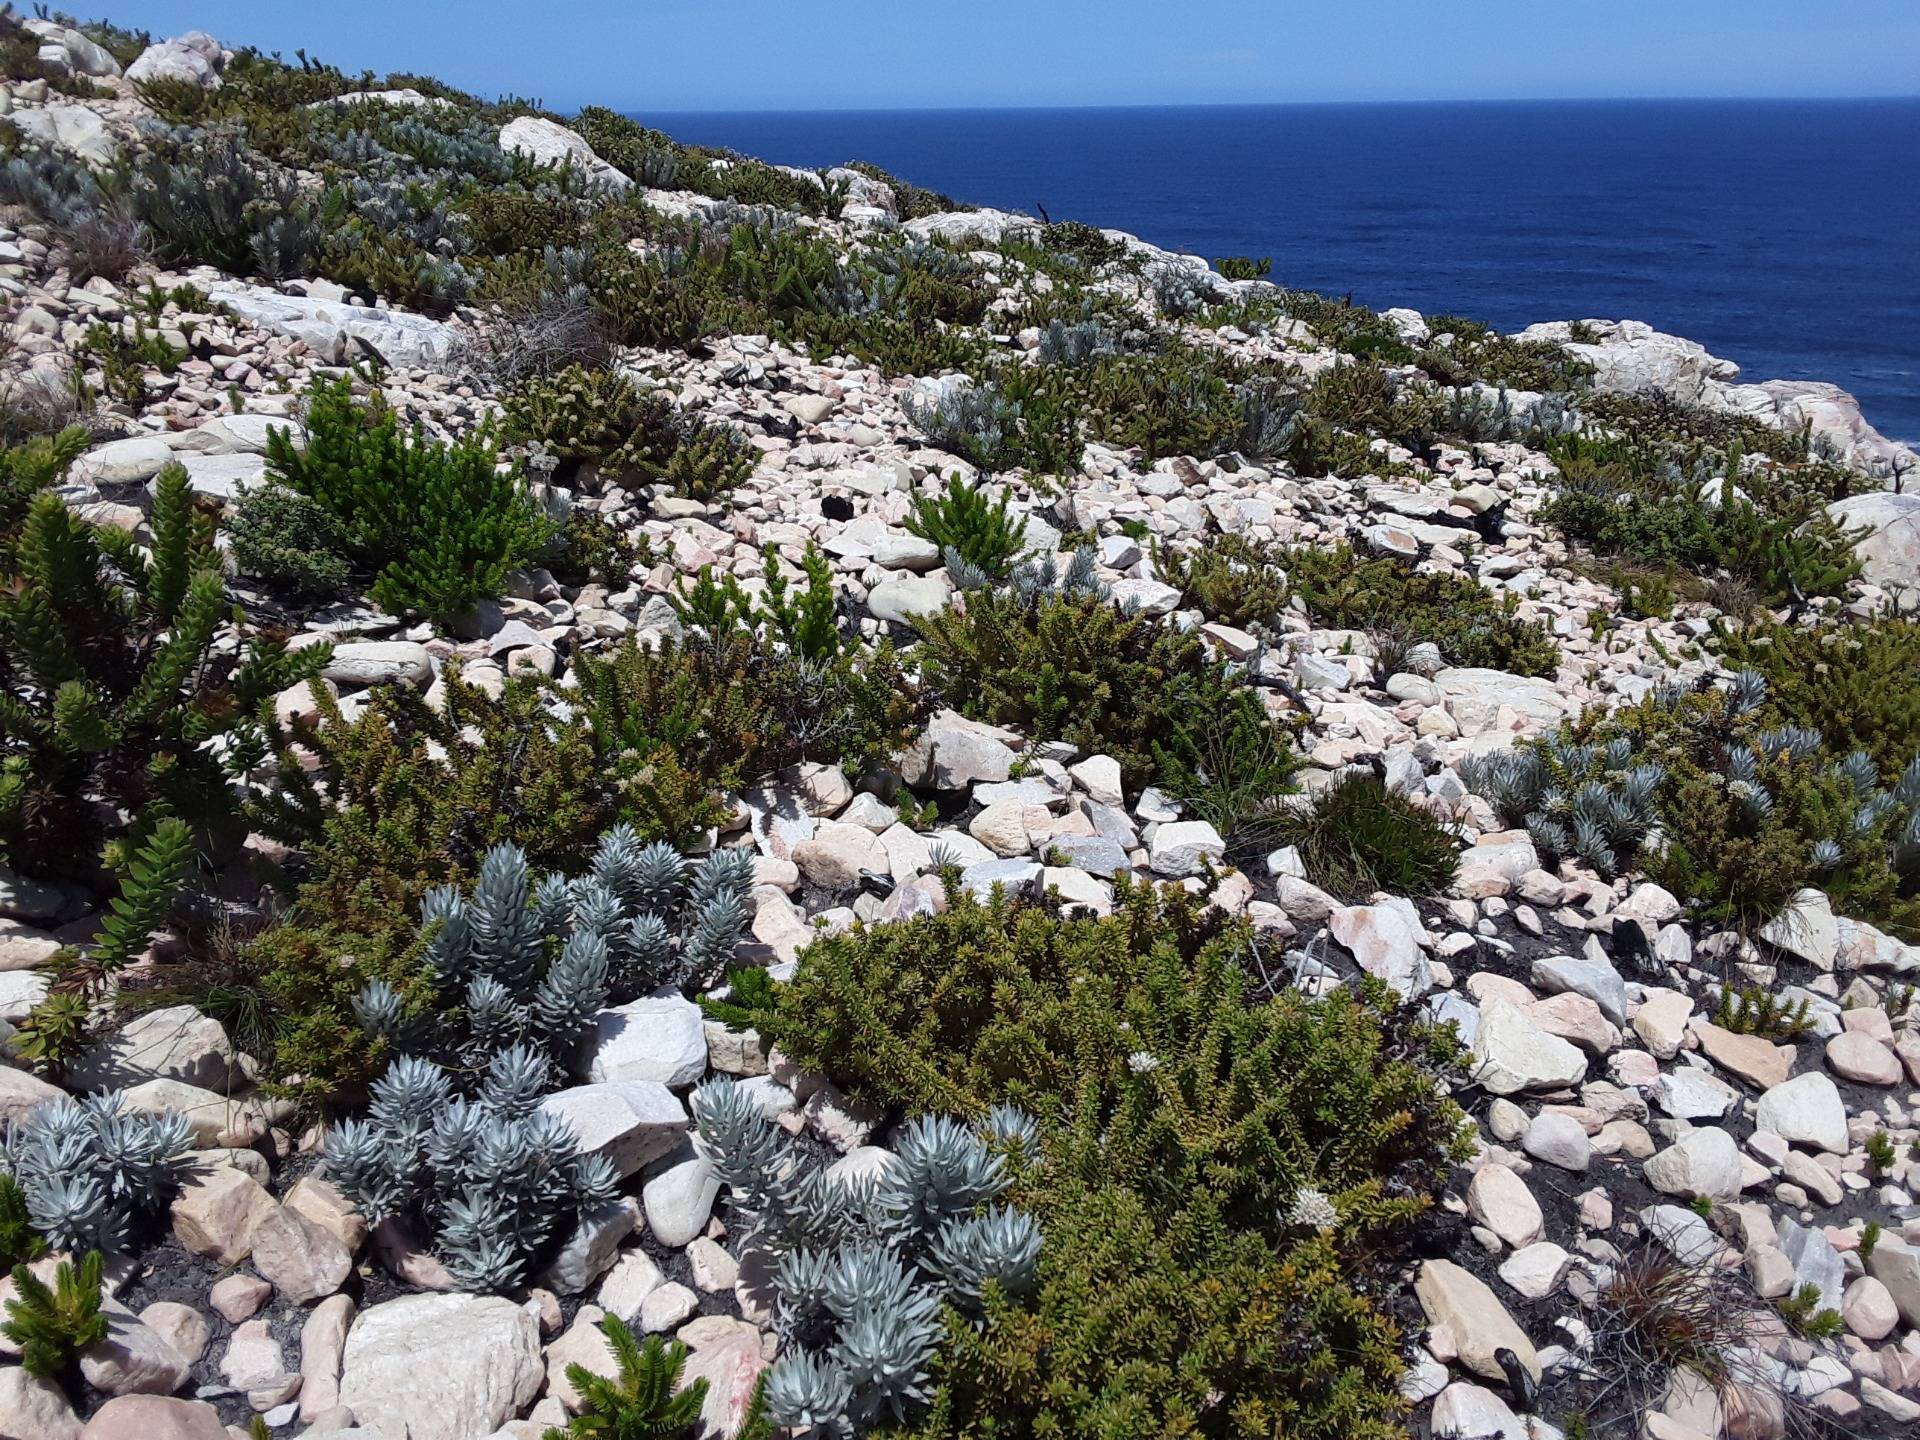 Humble ”fynbos” vegetation that hugs the landscape 